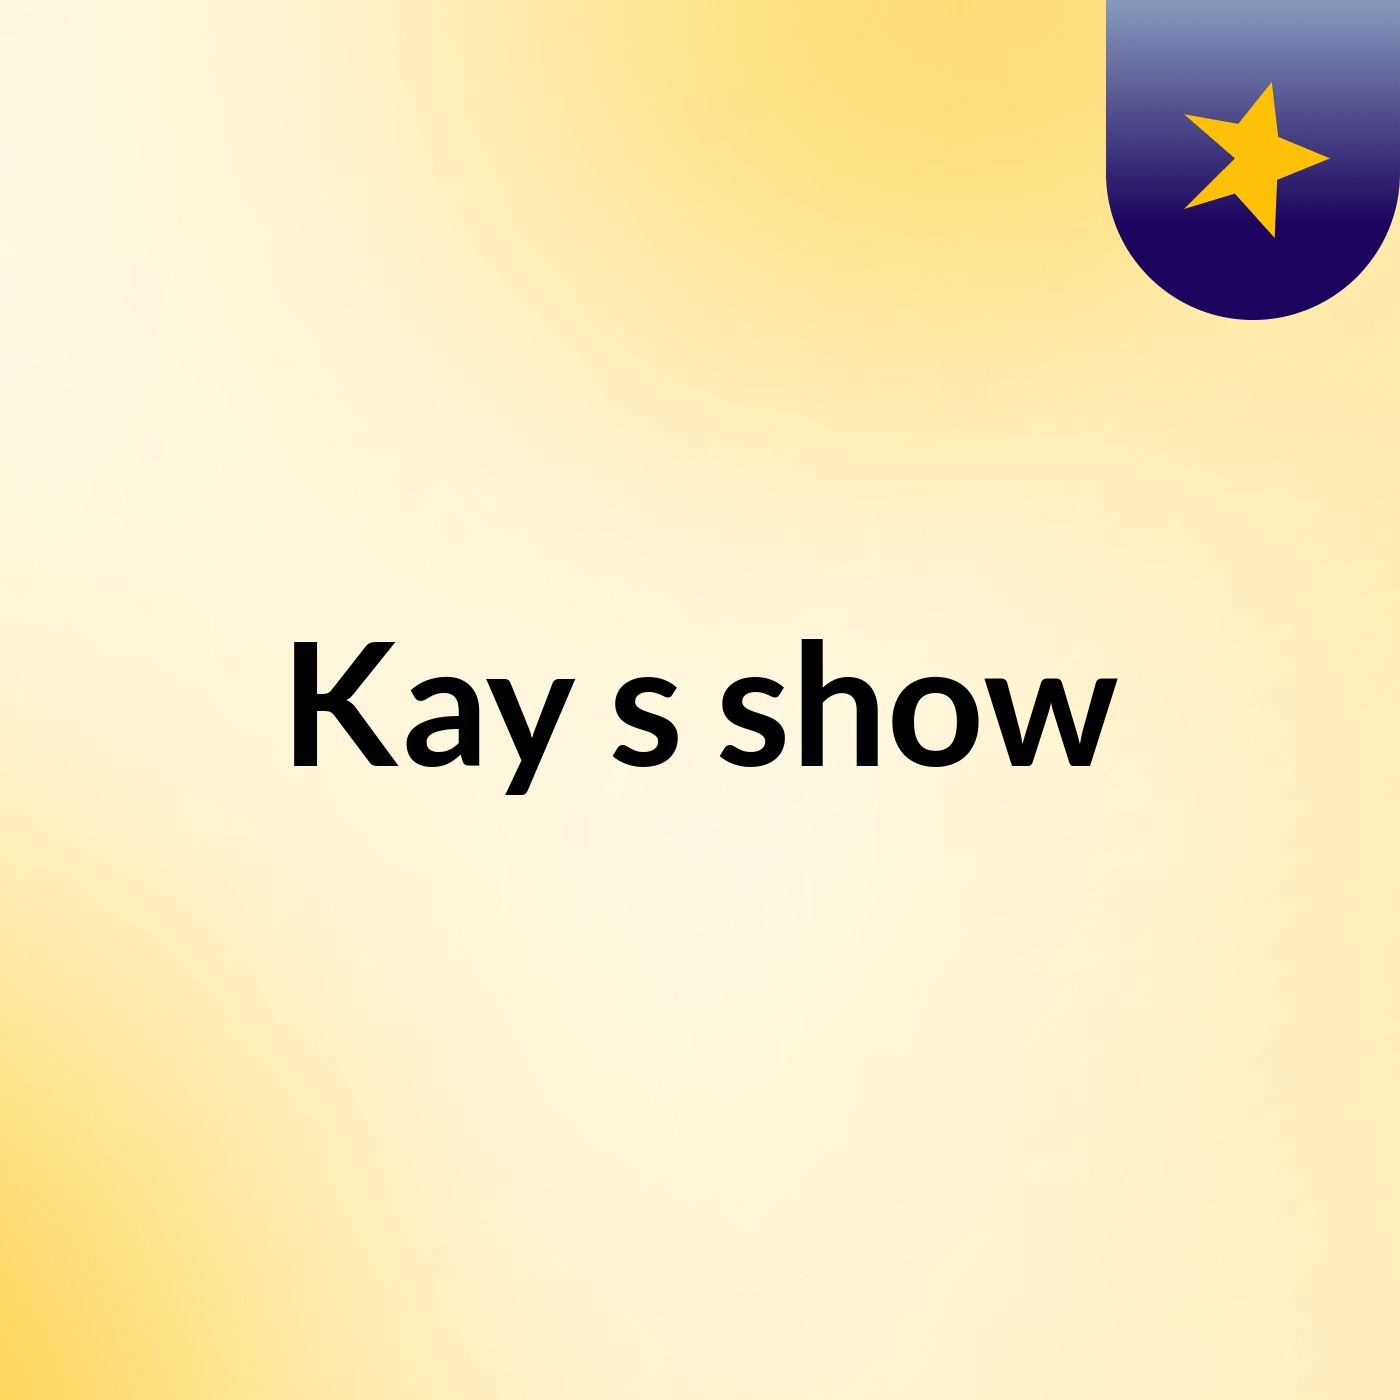 Episode 1- P2 - Kay's show